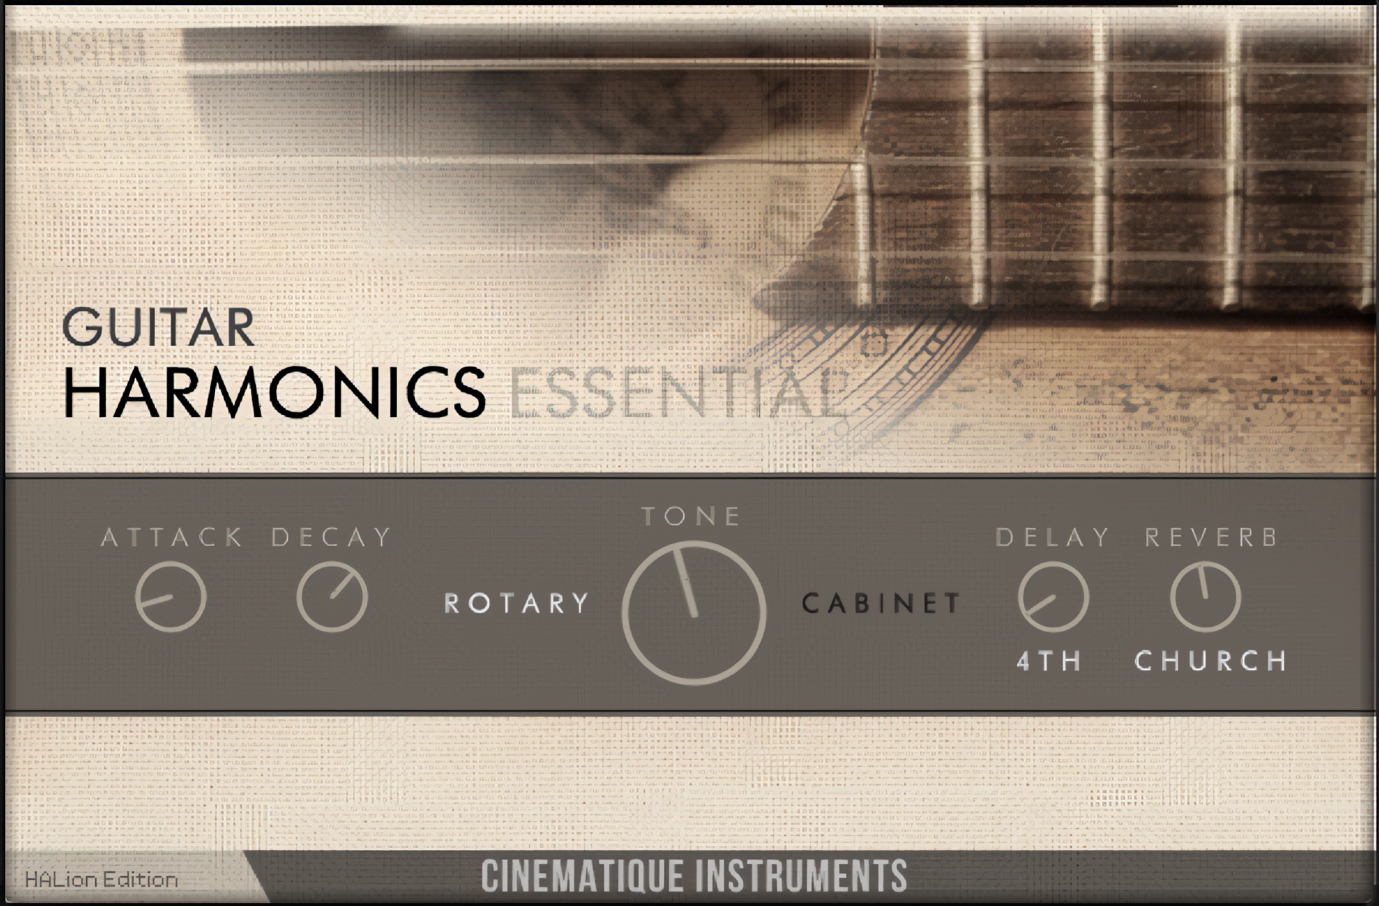 Guitar Harmonics Essential by Cinematique Instruments